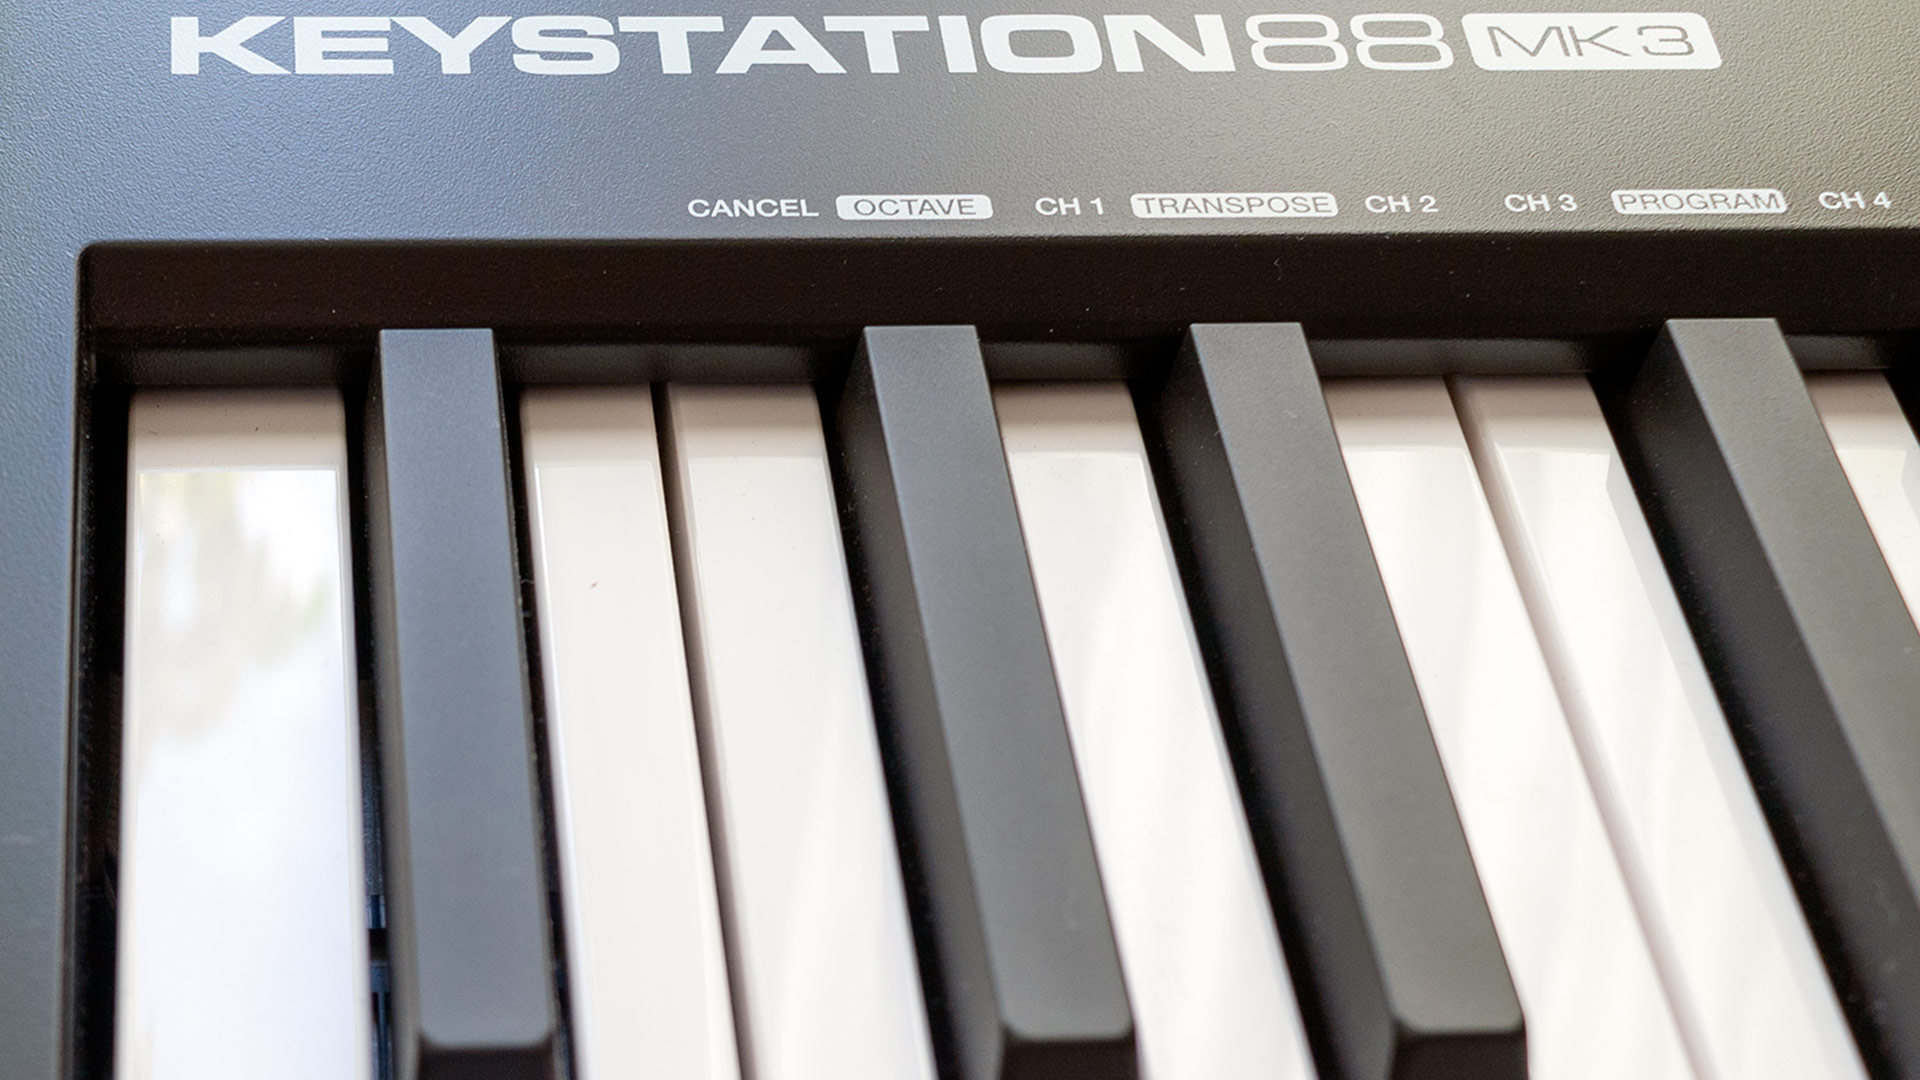 A closeup photo showing the keys of the M-AUDIO Keystation 88 MK3 keyboard.